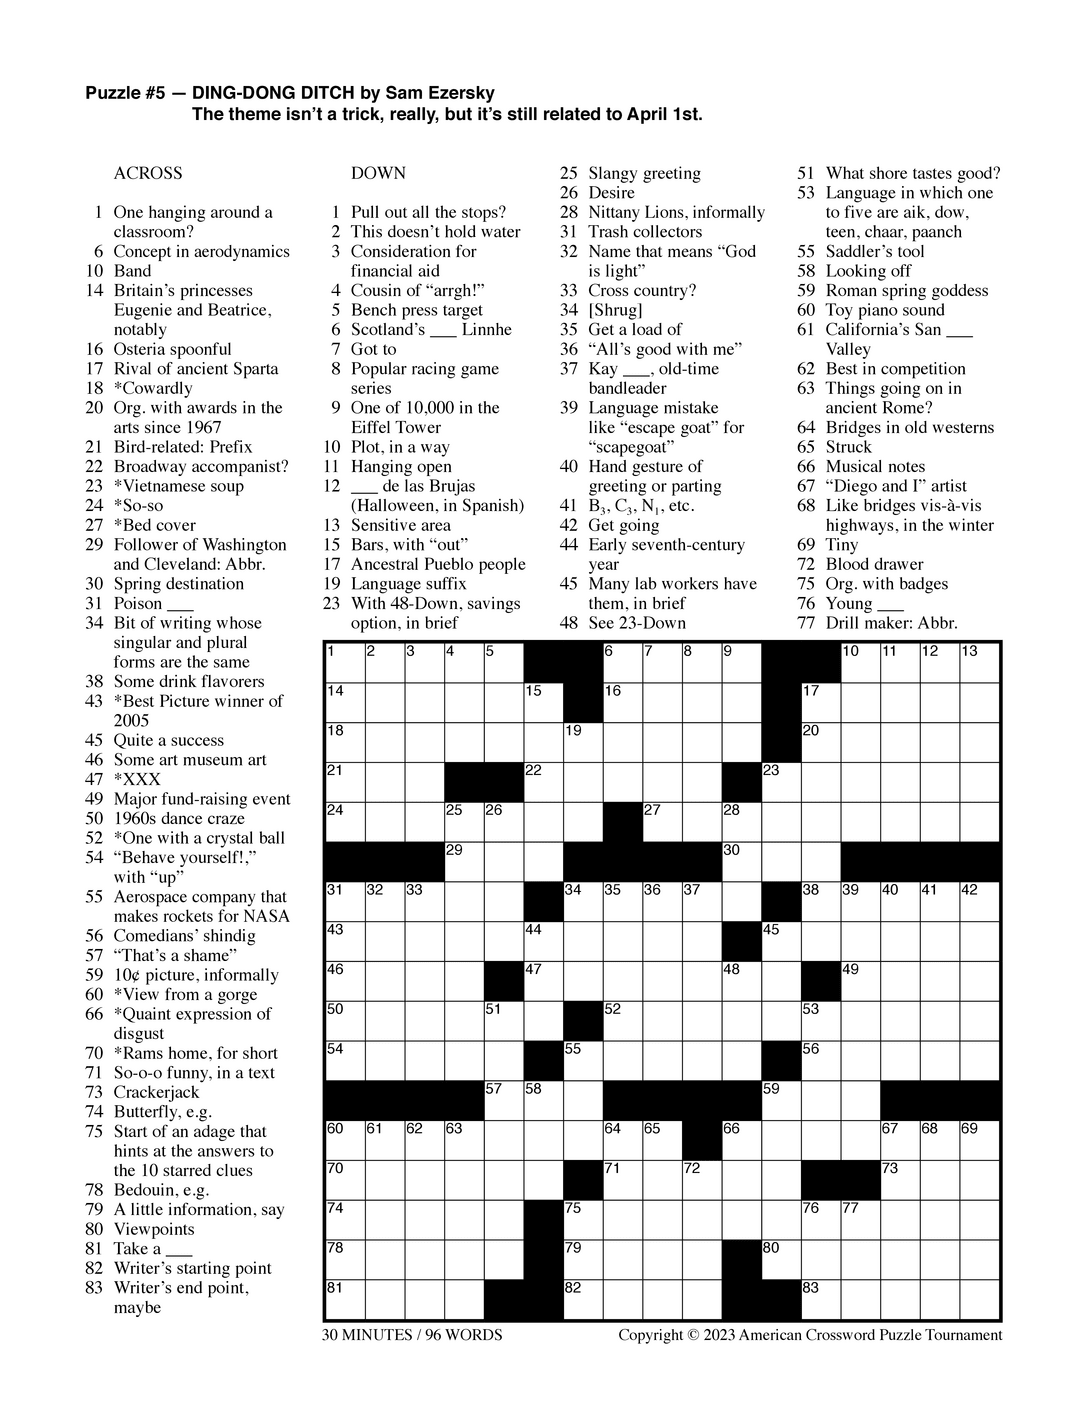 cowardly crossword clue